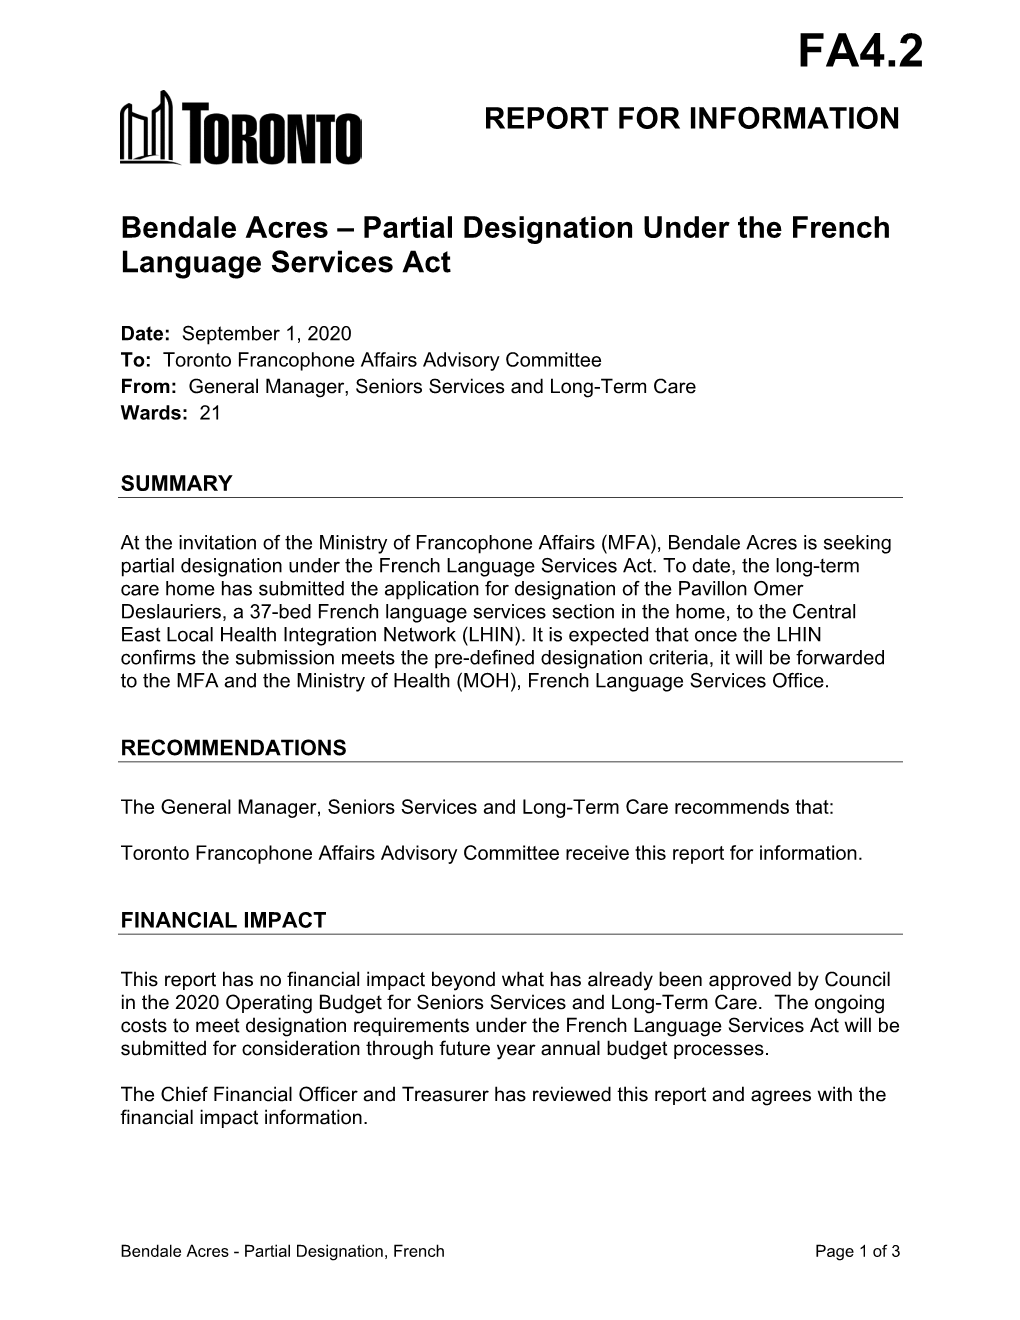 Bendale Acres – Partial Designation Under the French Language Services Act